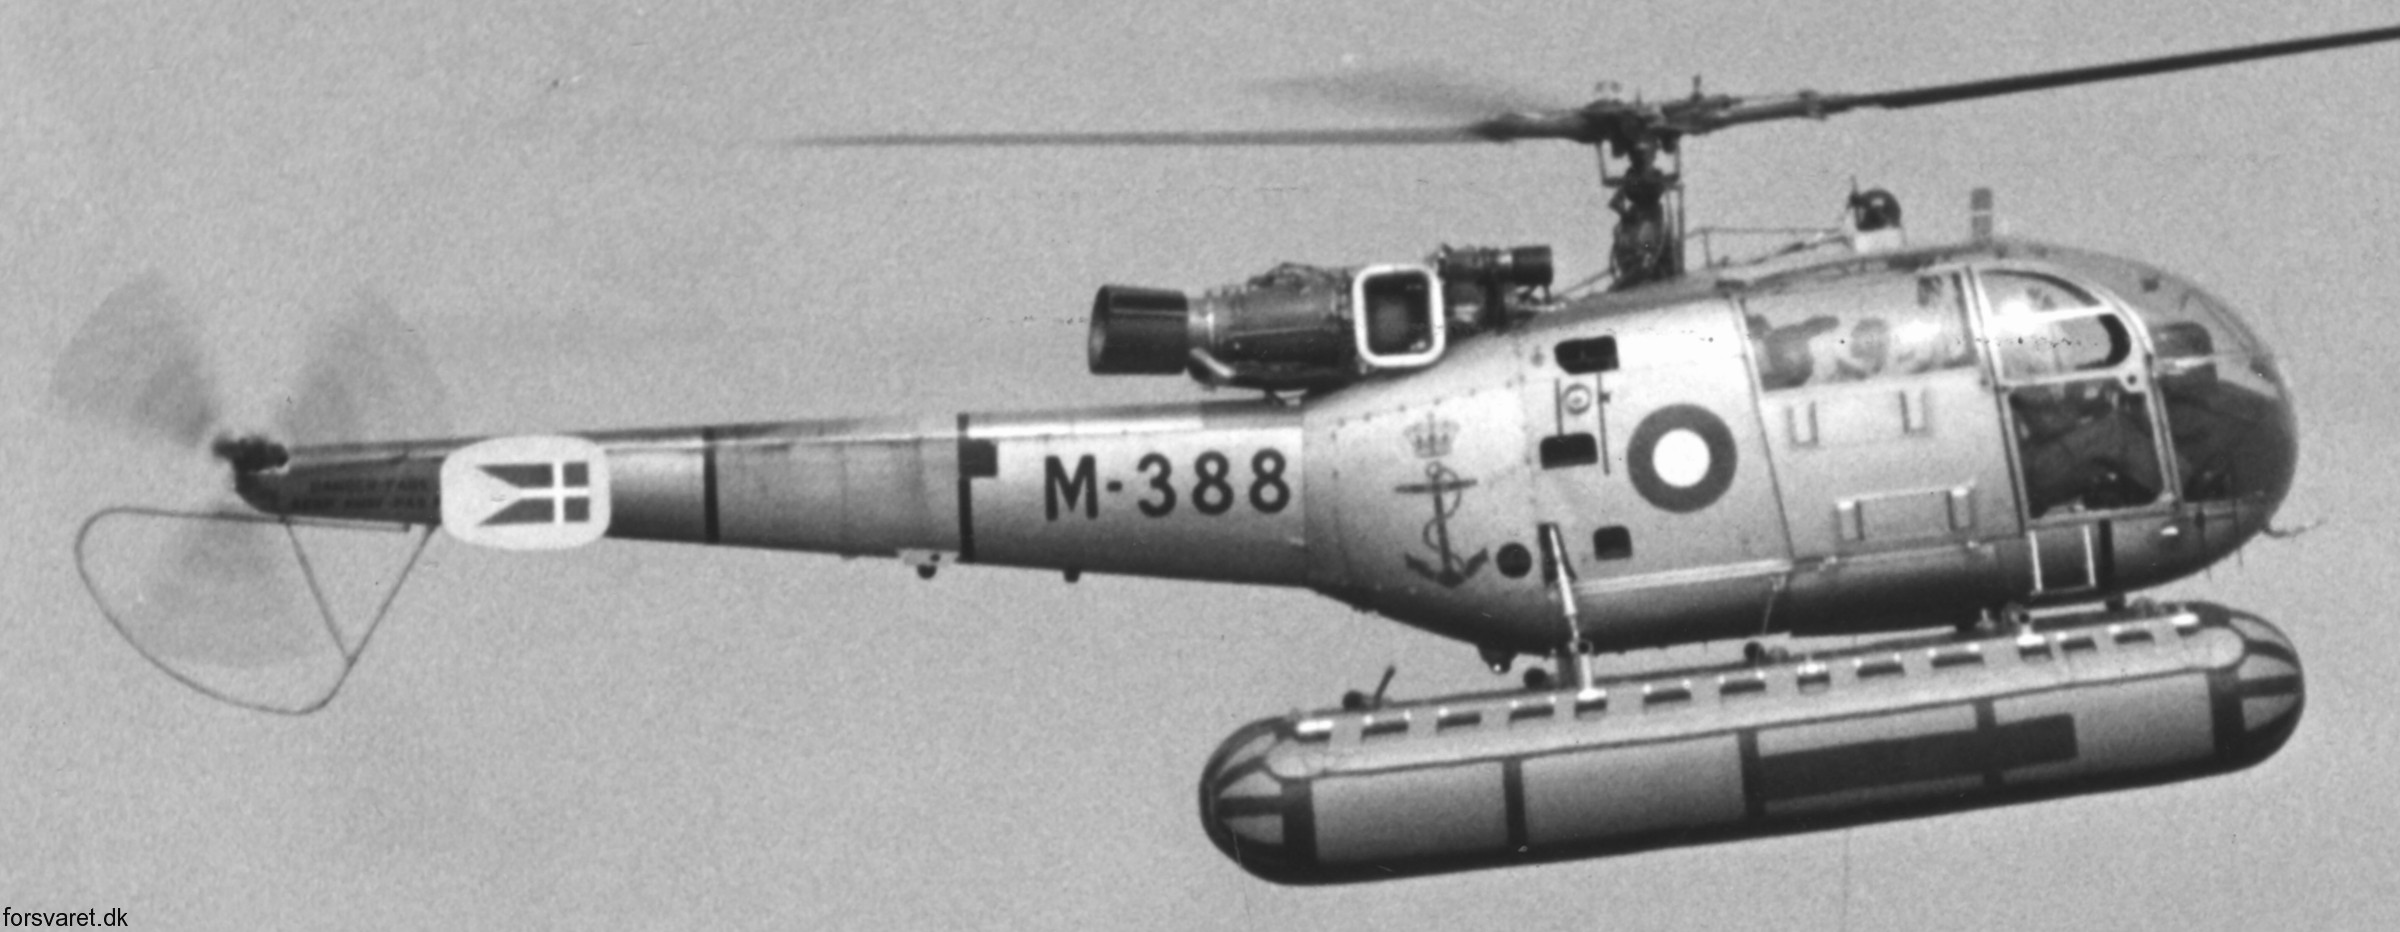 sa 316b alouette iii helicopter royal danish navy søværnet kongelige danske marine sud aviation m-388 05